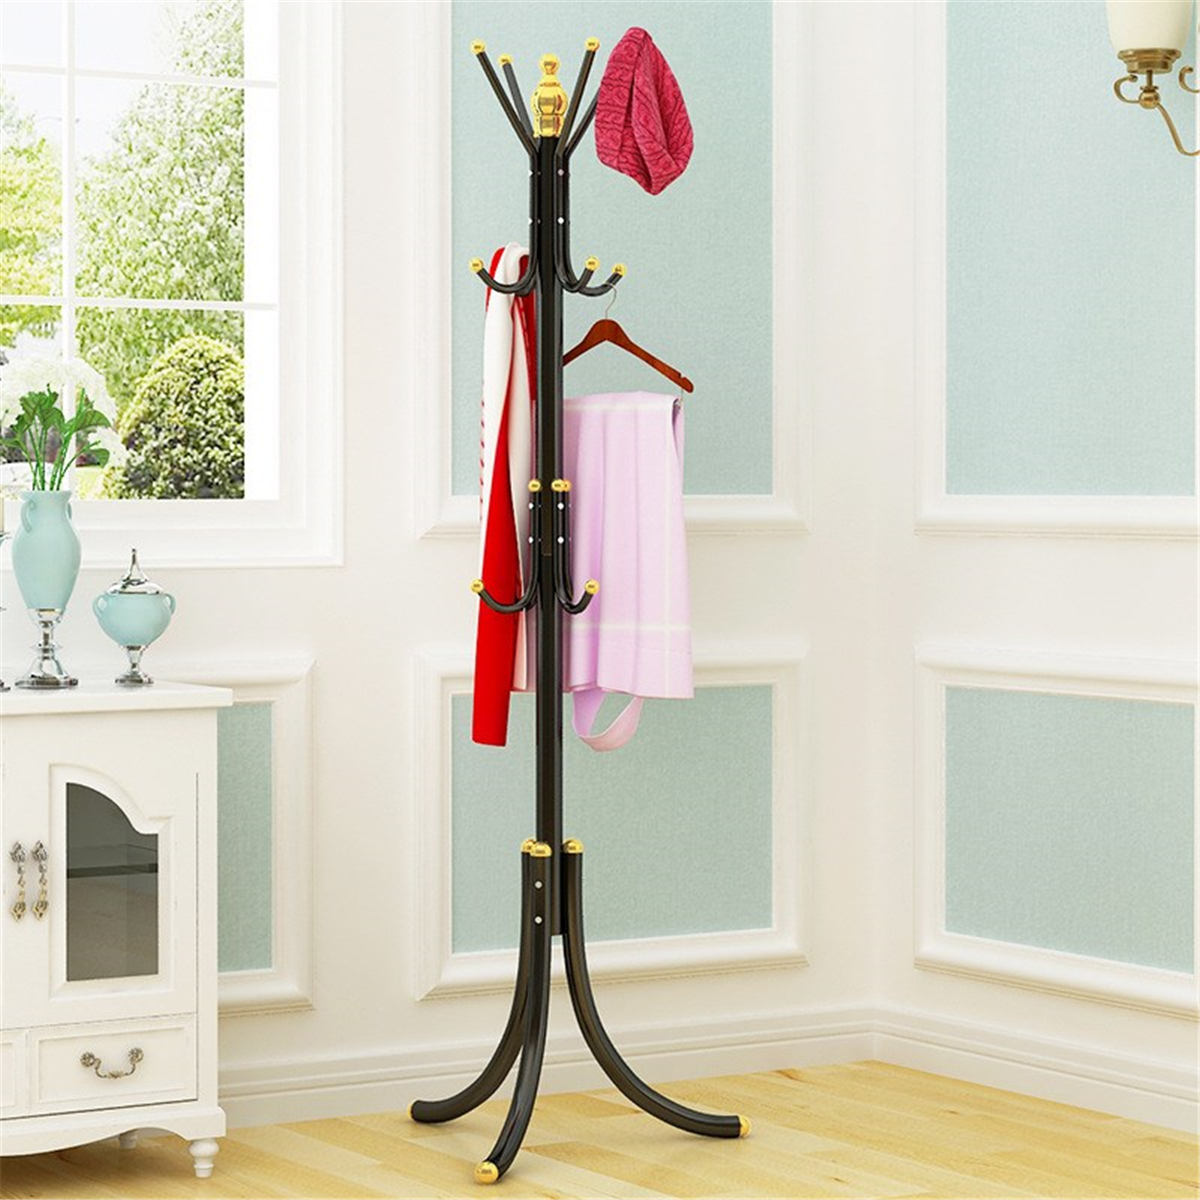 Coat-Rack-Hat-Stand-Clothes-Hanger-Umbrella-Holder-Metal-Home-Office-Entry-1679513-1